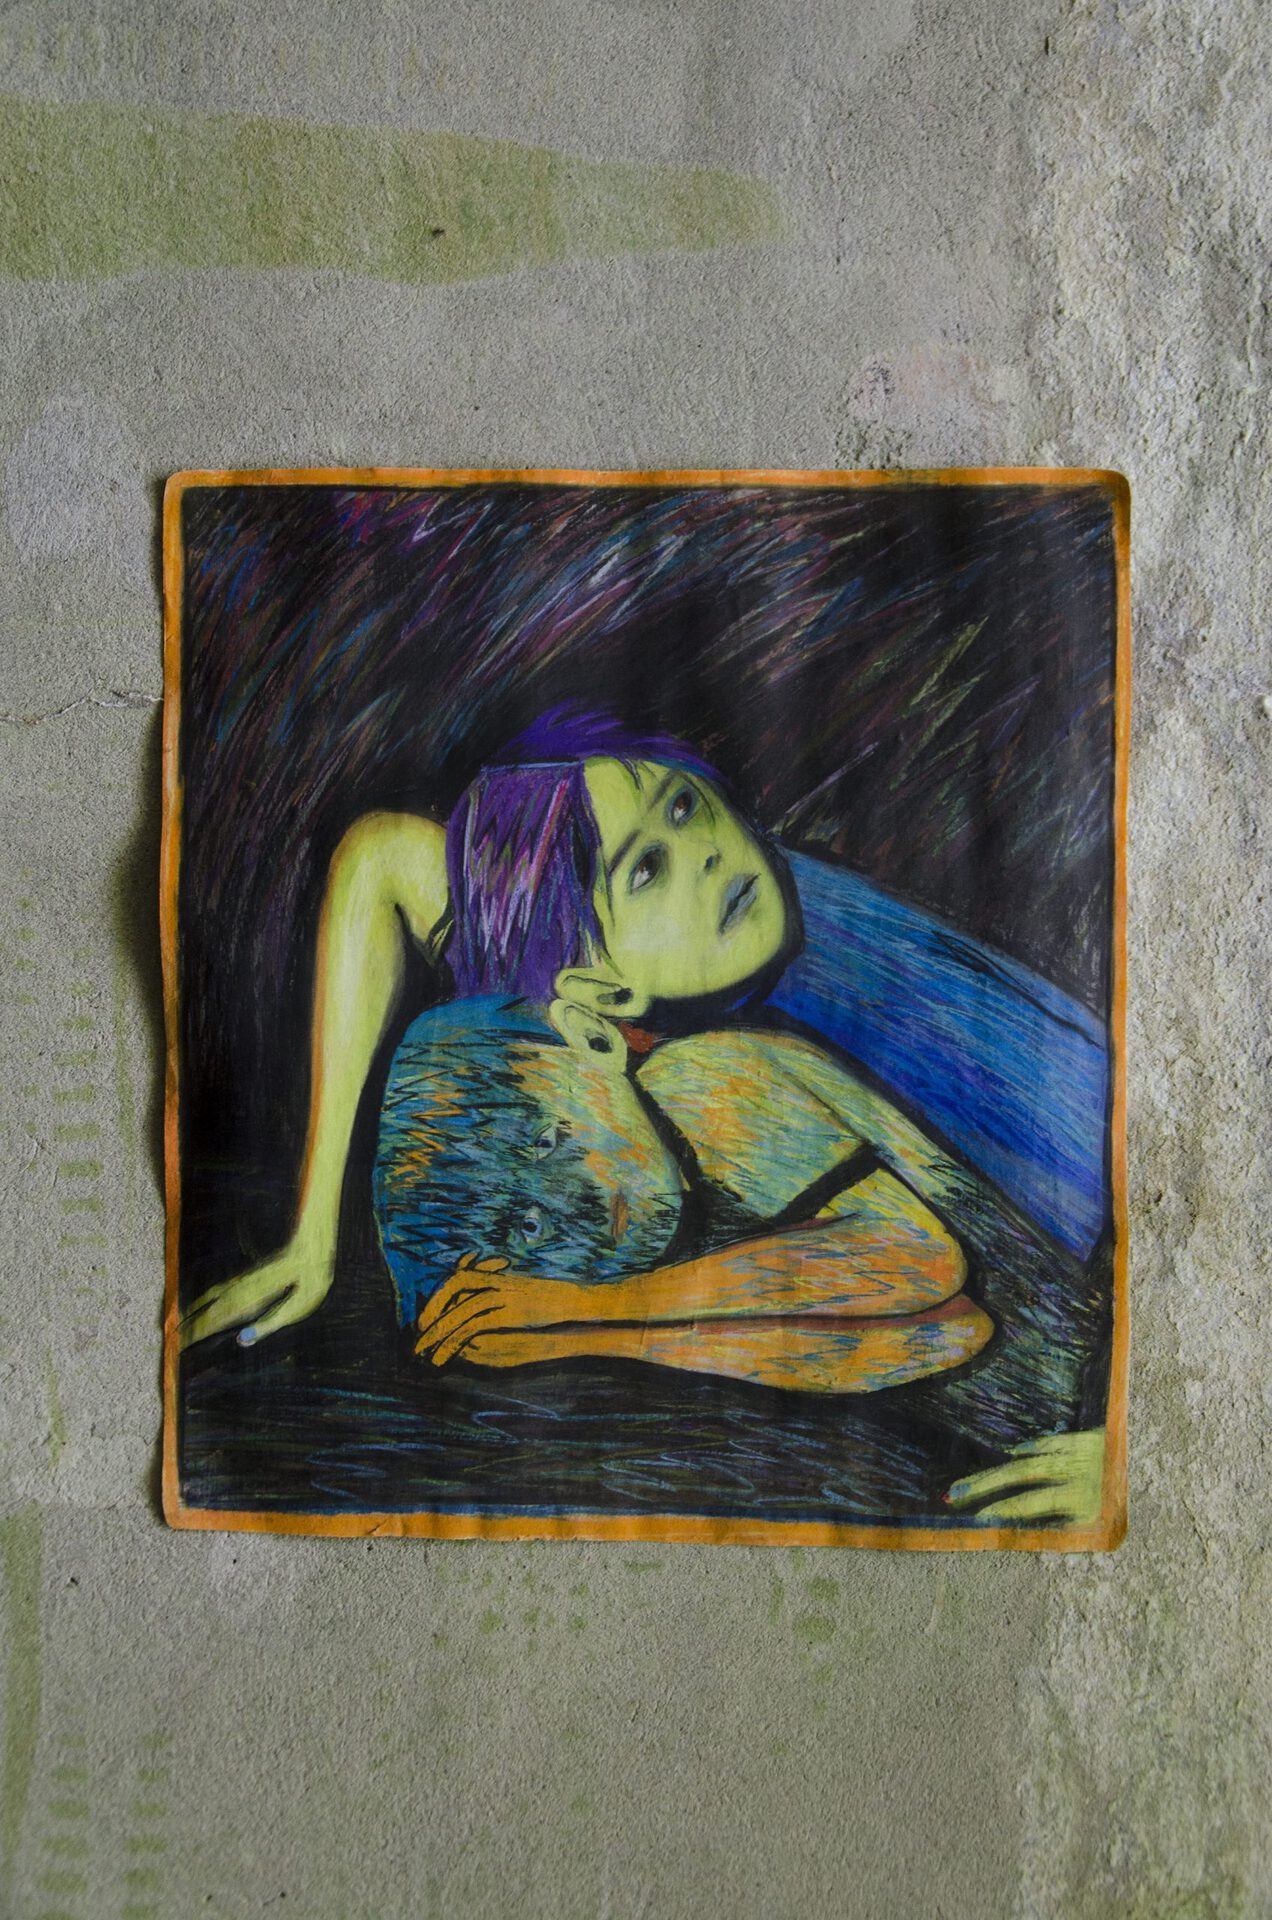 Giuliana Rosso, 
Bisbigli batterici, 2021, 
chalks on paper